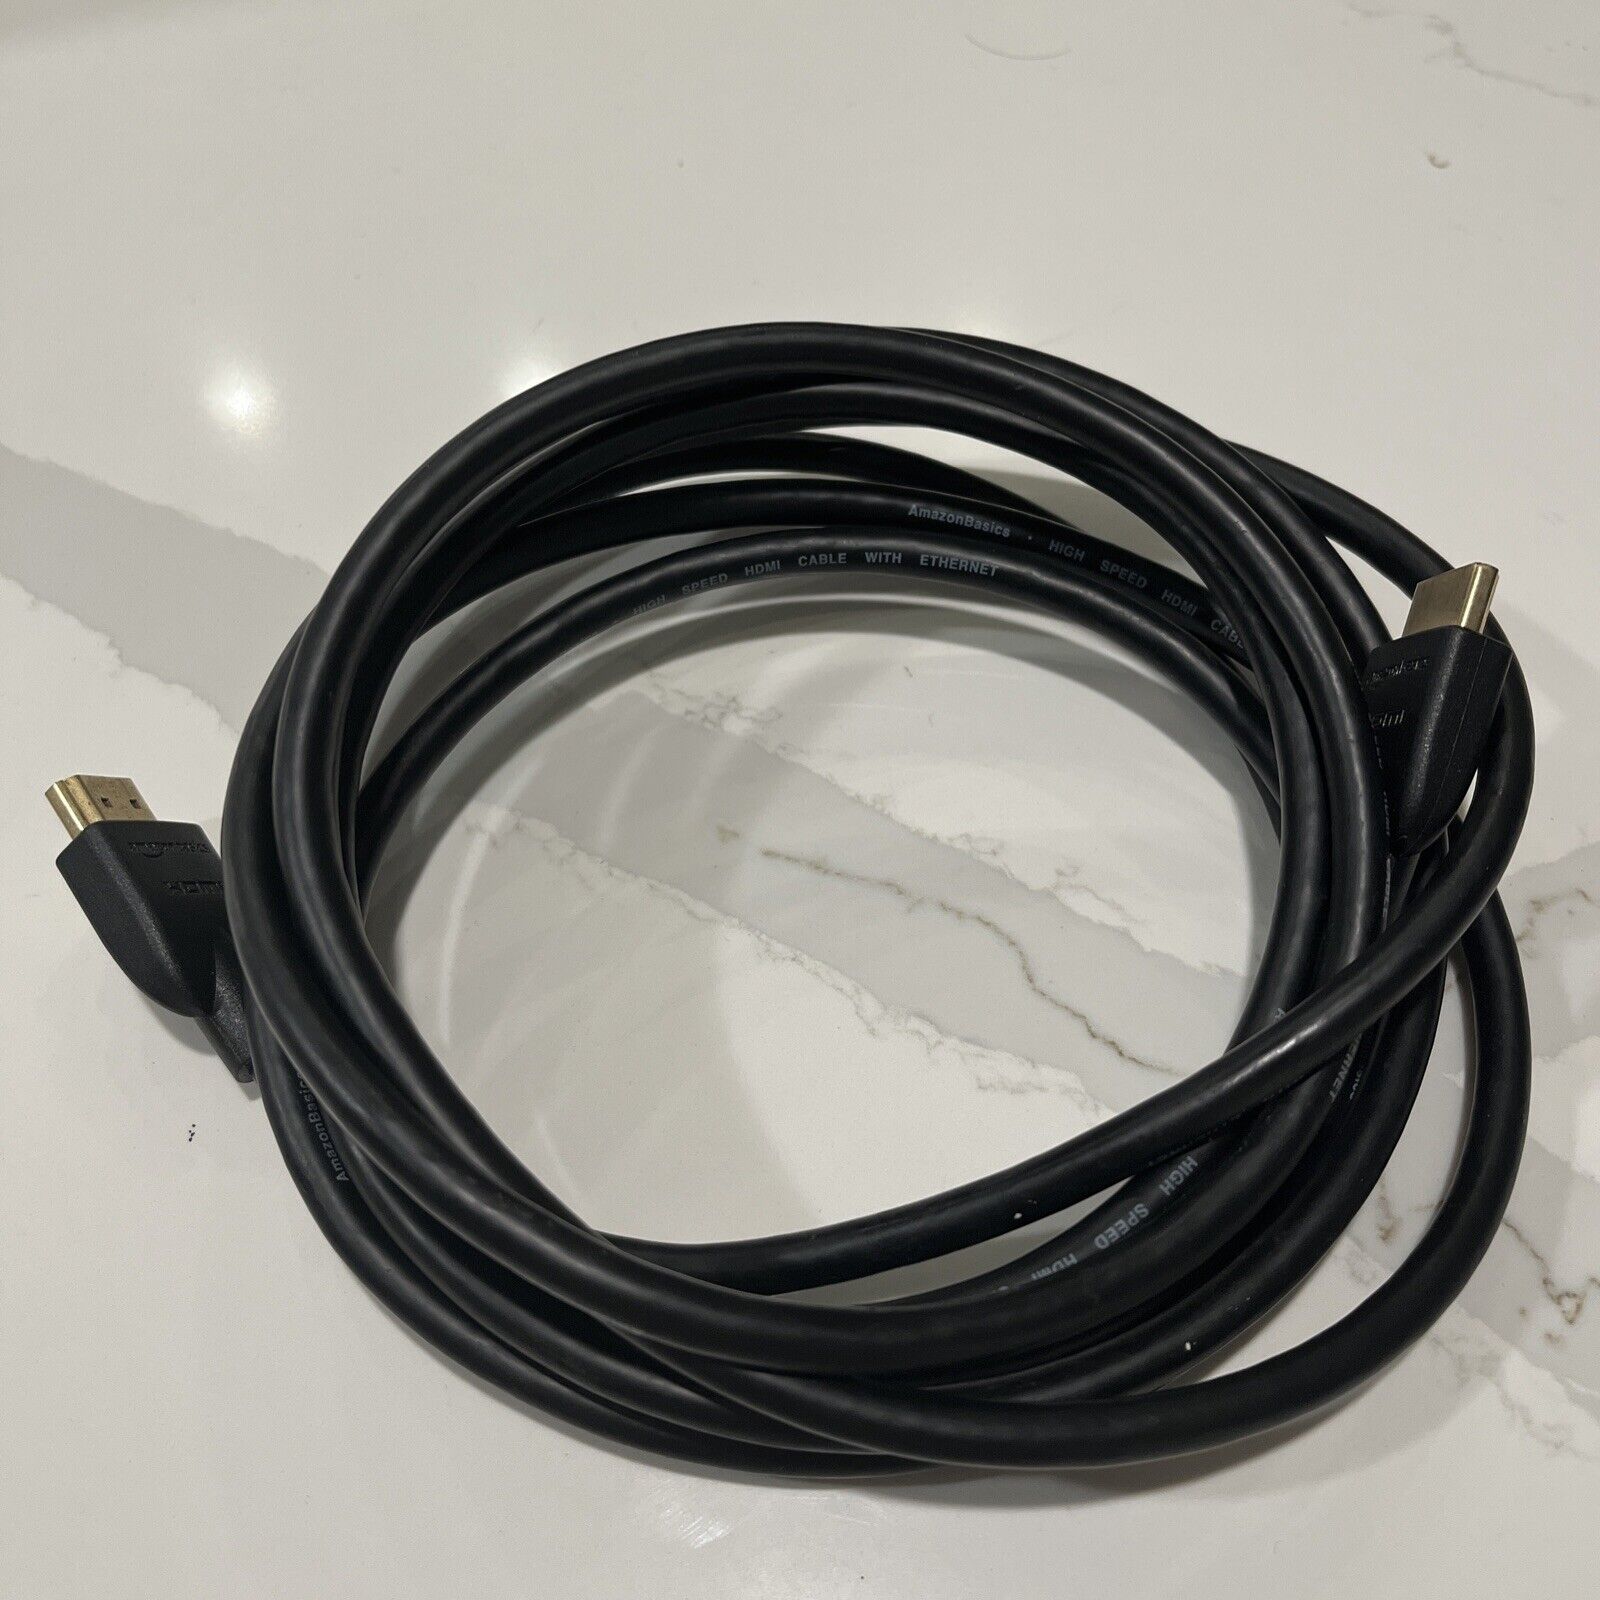 Amazon Basics HDMI Cable Cord, 10-Ft Black